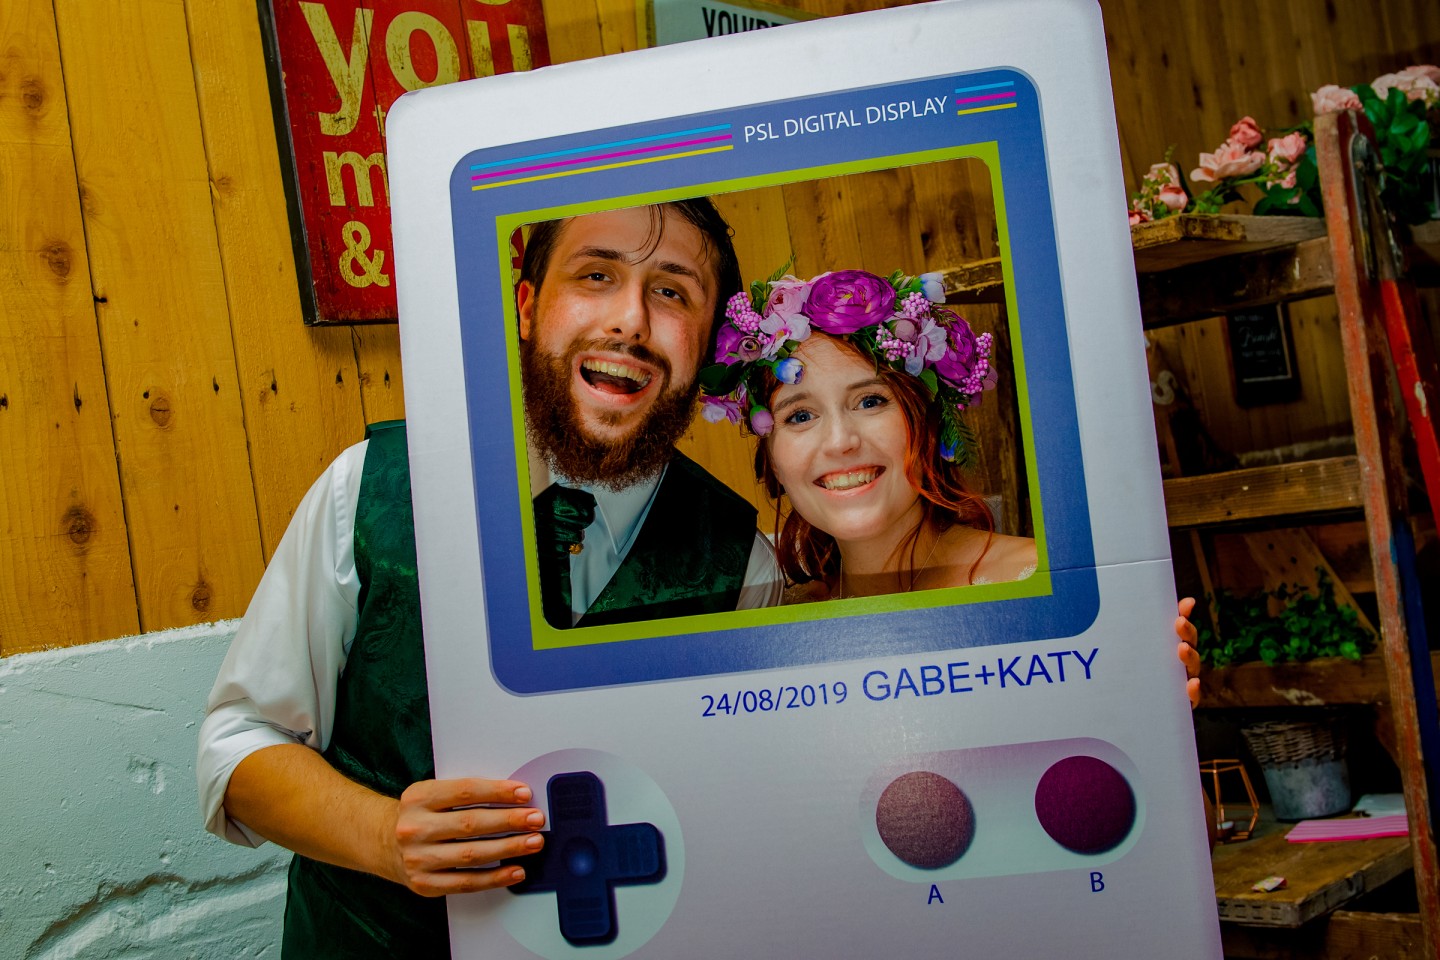 gamer wedding photo frame - quirky wedding photo frame - geeky wedding idea